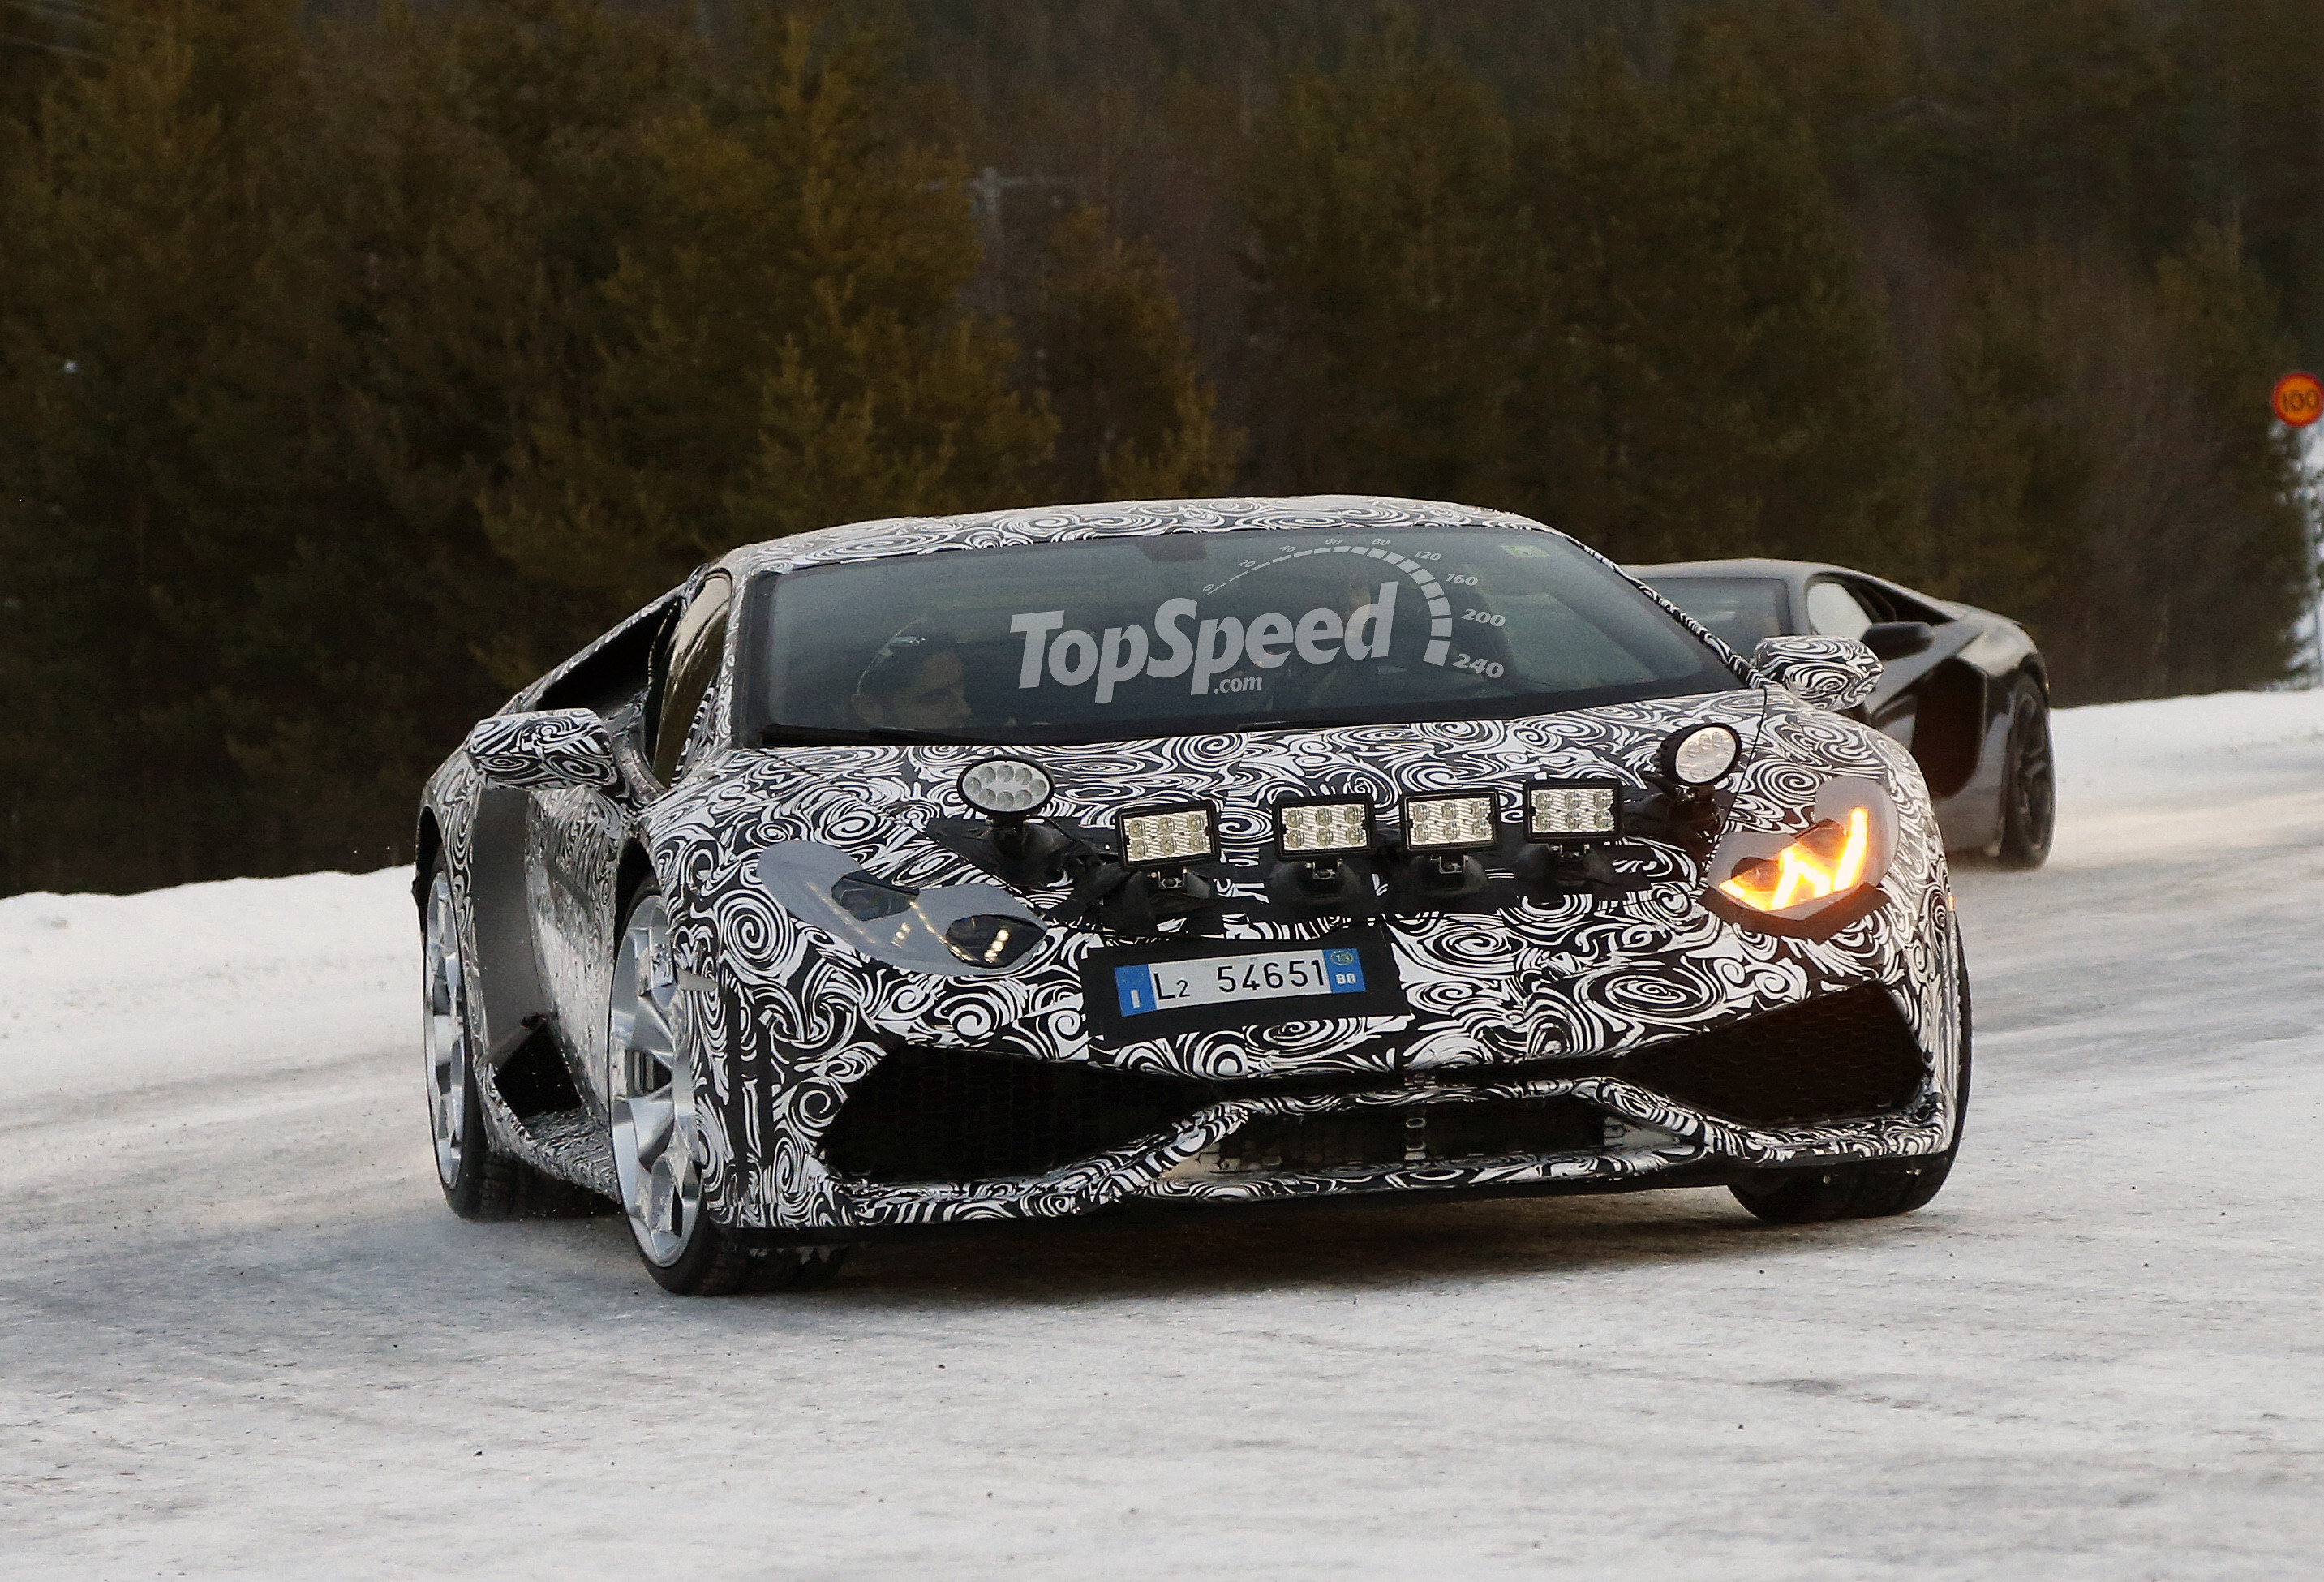 Spy Shots: Lamborghini Gallardo Successor Caught Testing in the Snow